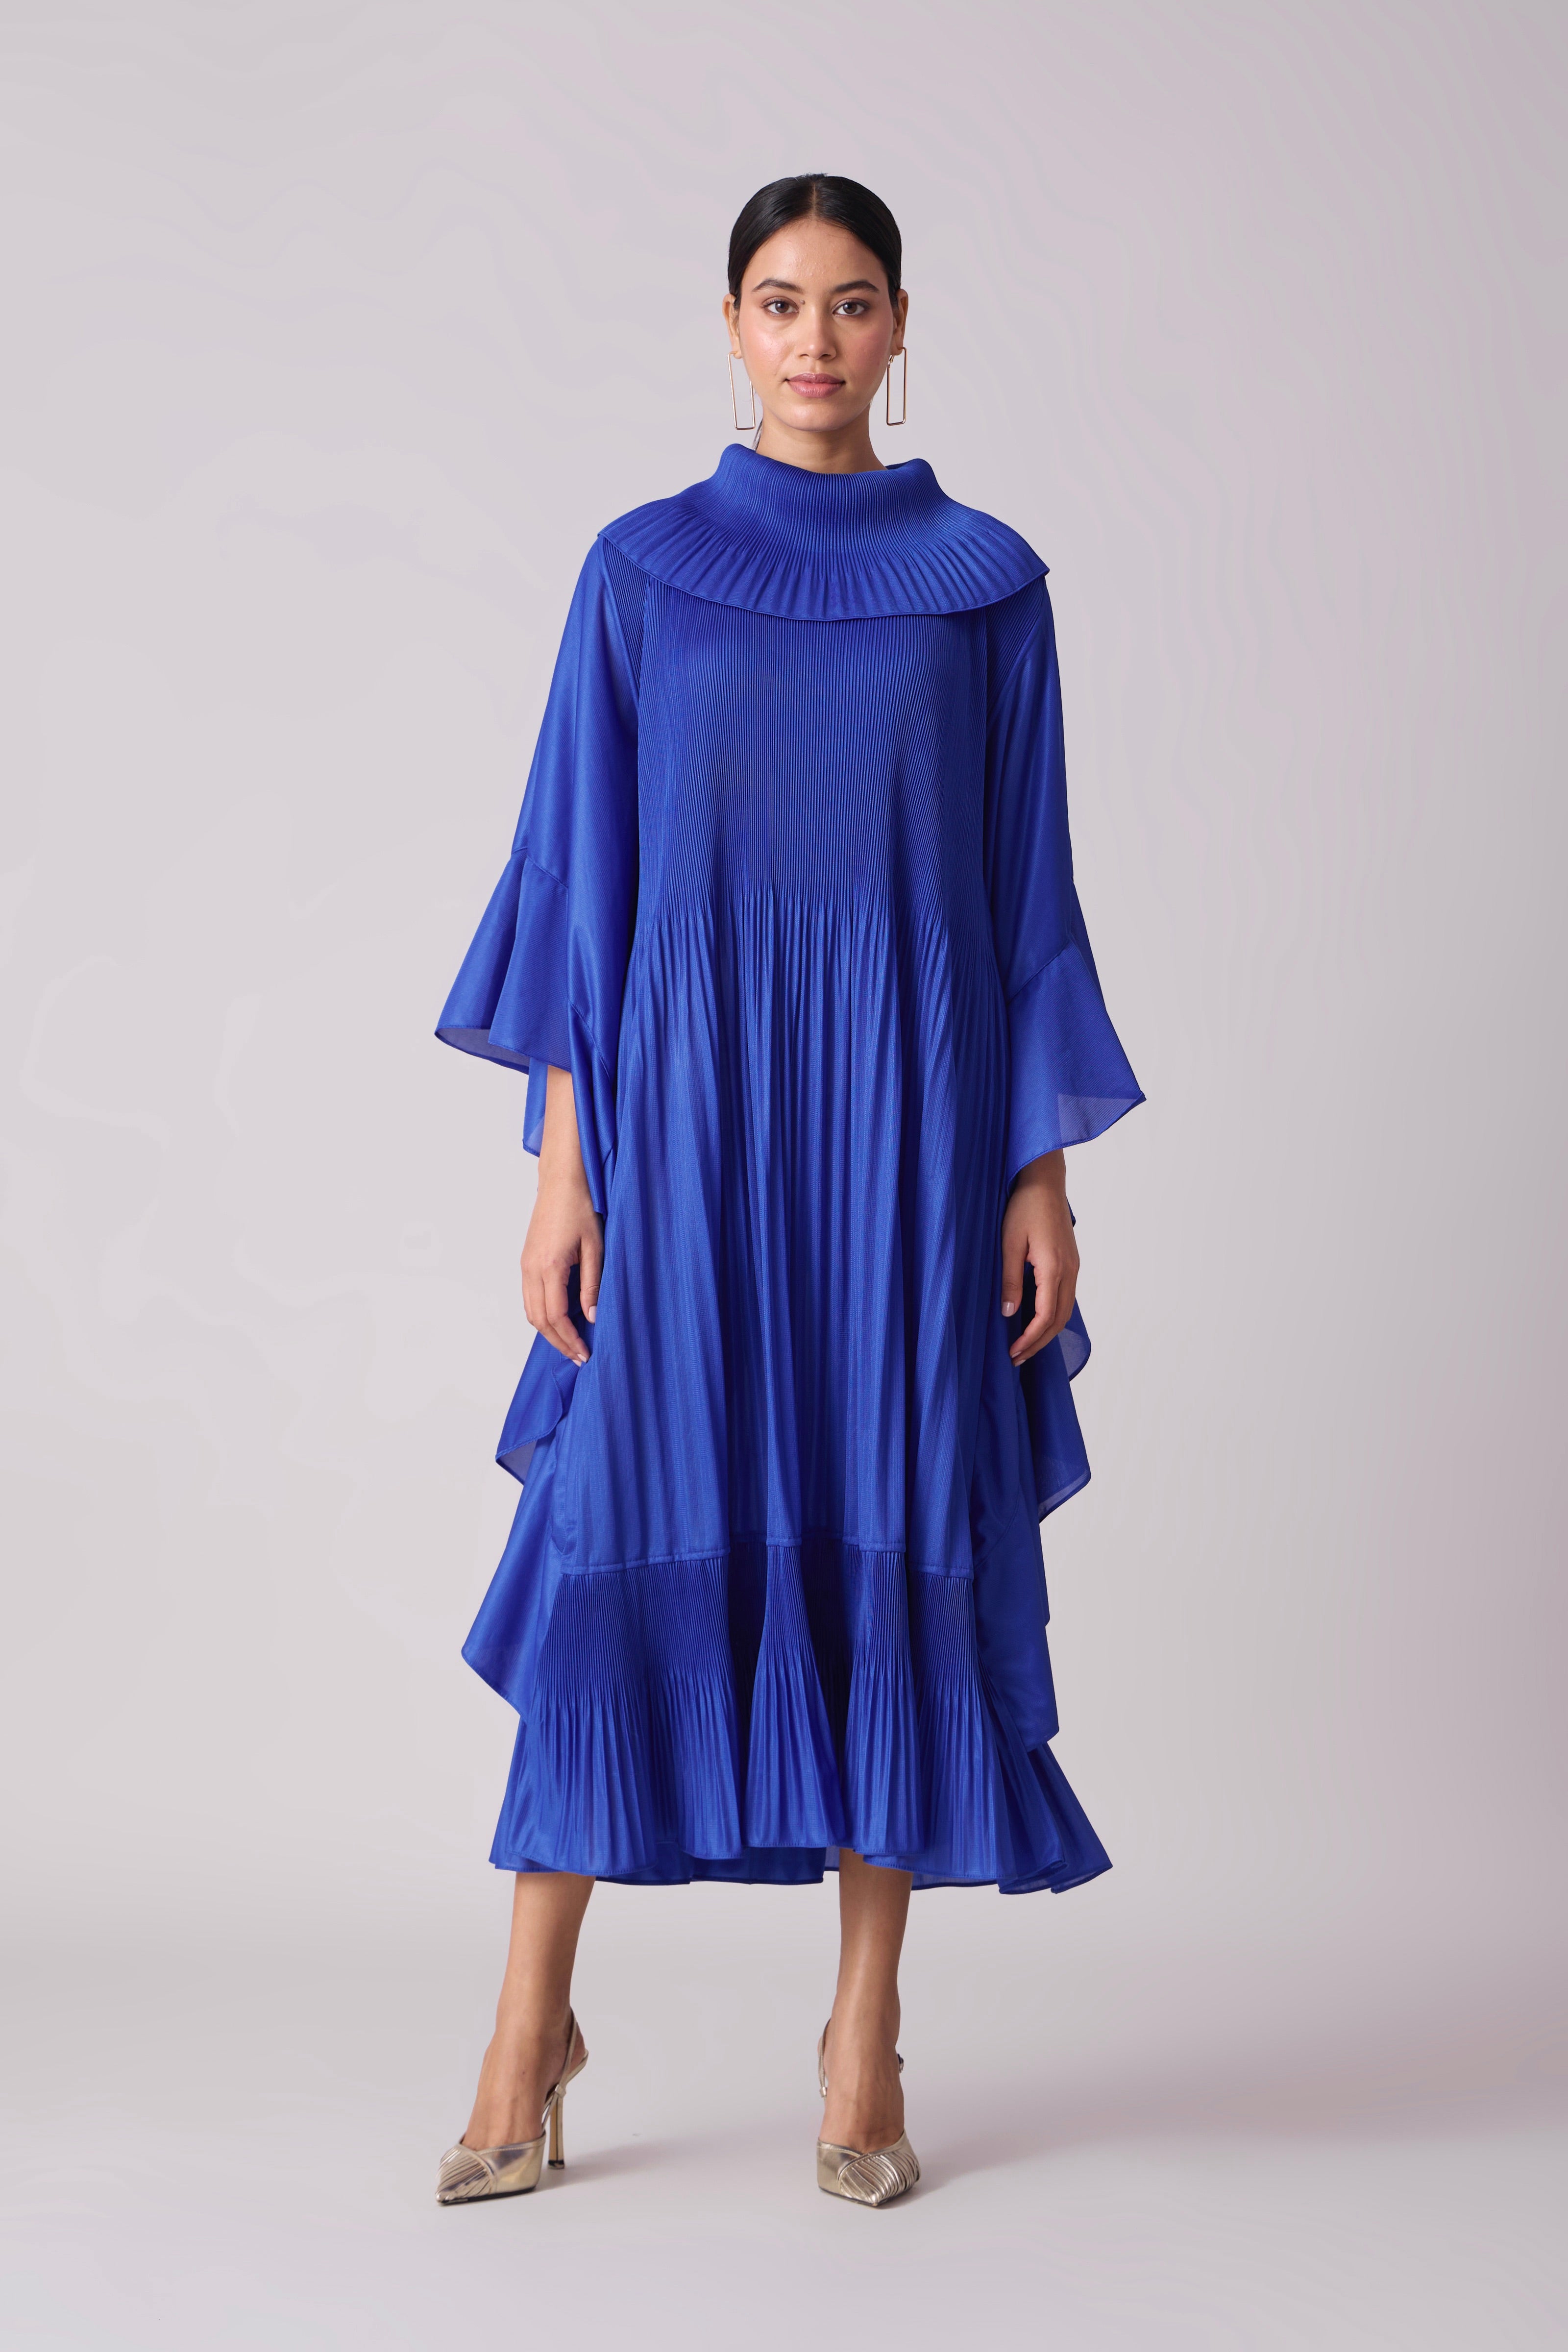 Tiana Dress - Azure Blue